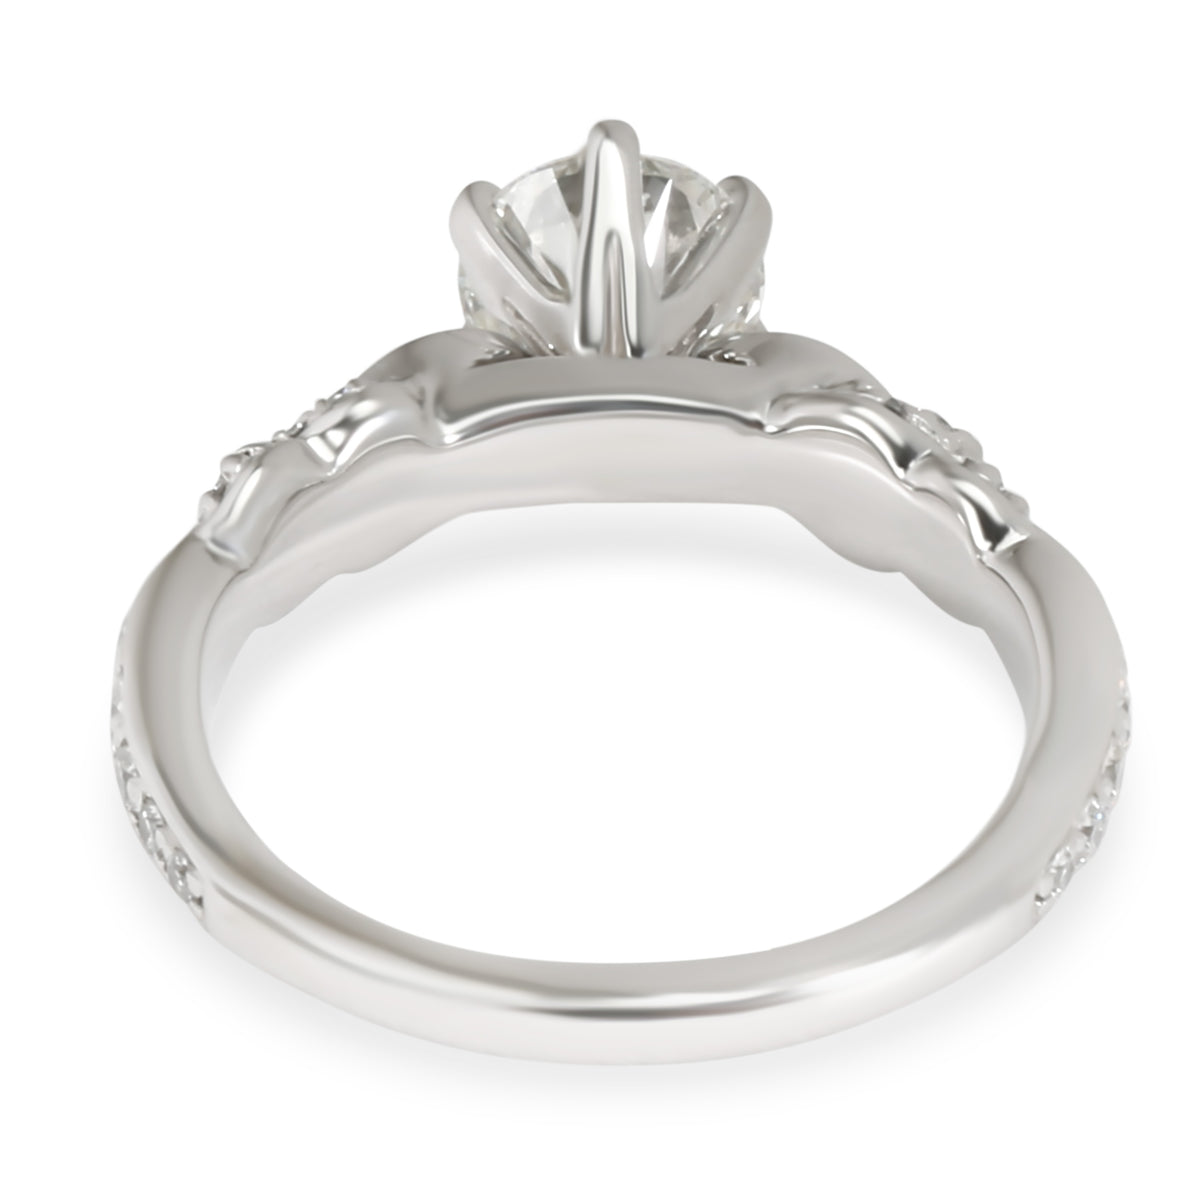 Monique Lhuillier Diamond Engagement Ring in Platinum GIA H VVS1 1.38 CTW